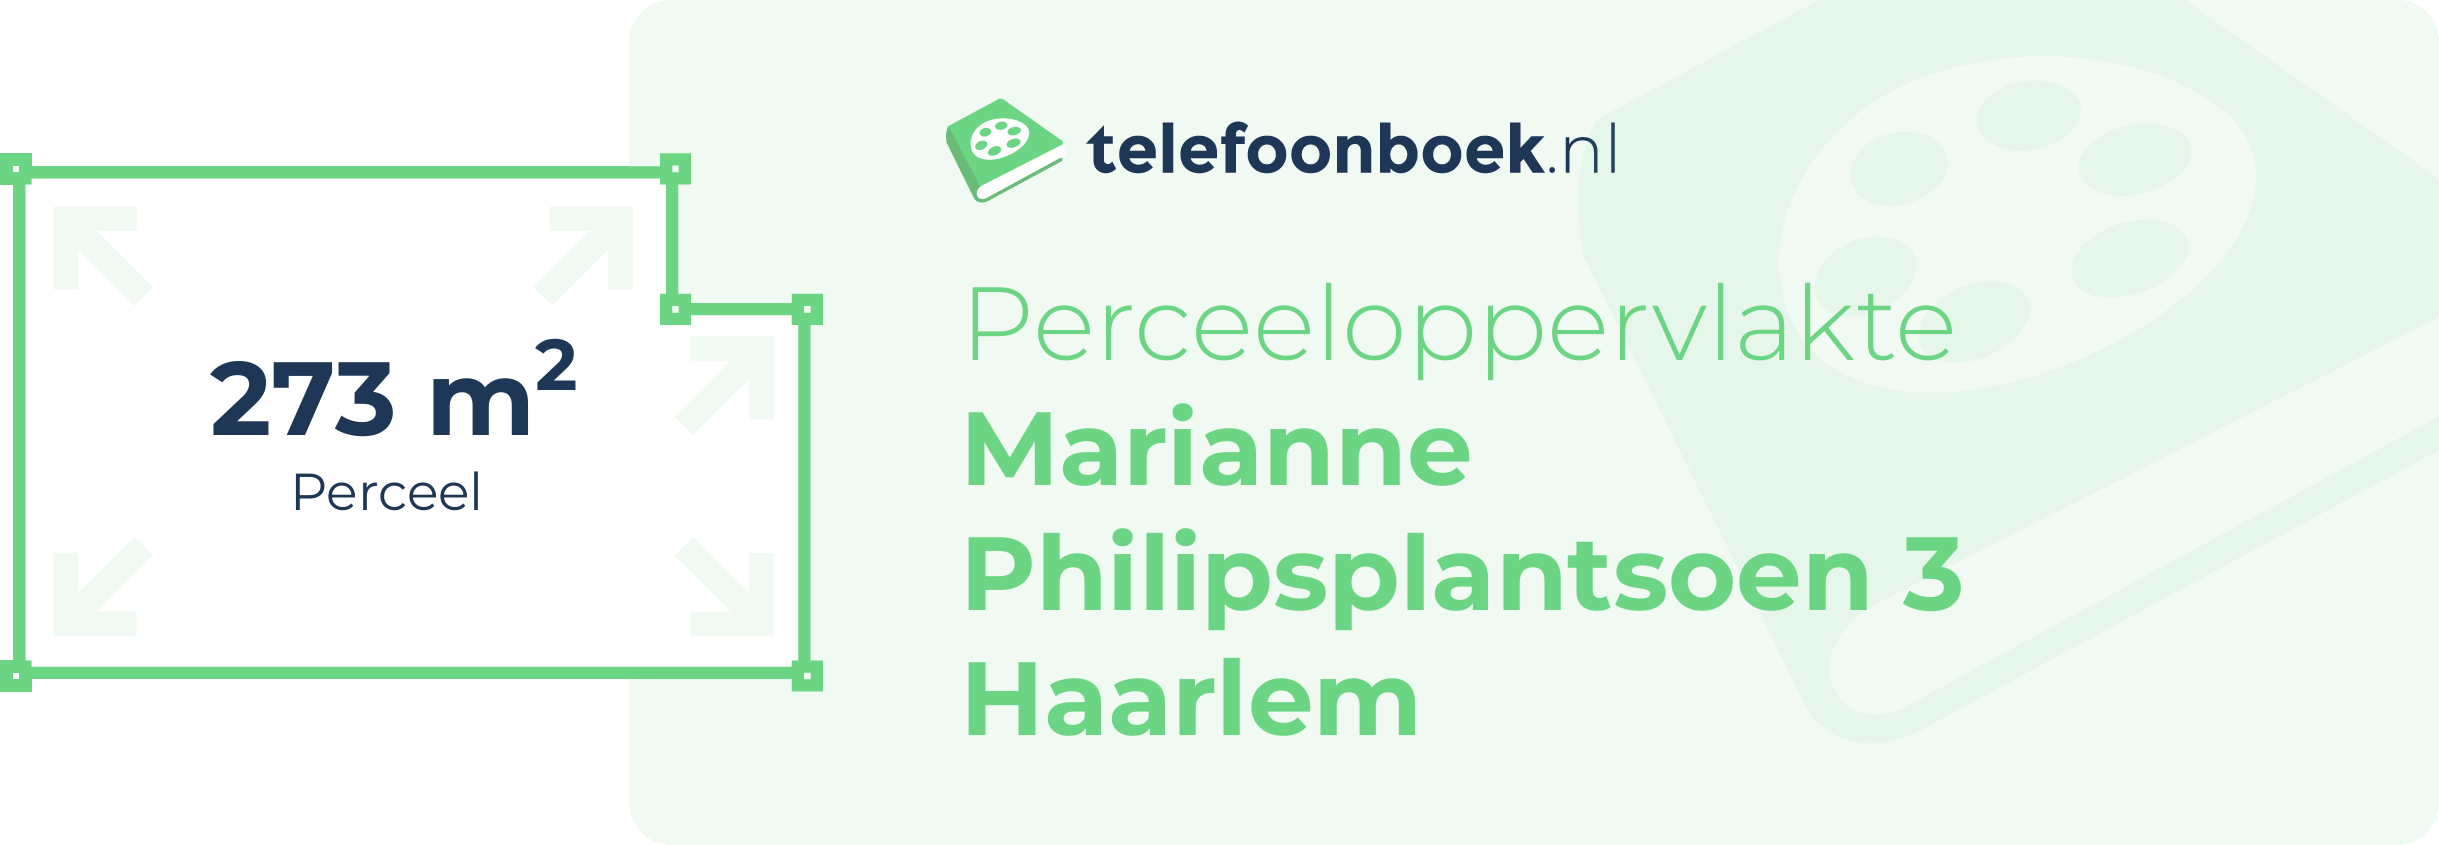 Perceeloppervlakte Marianne Philipsplantsoen 3 Haarlem